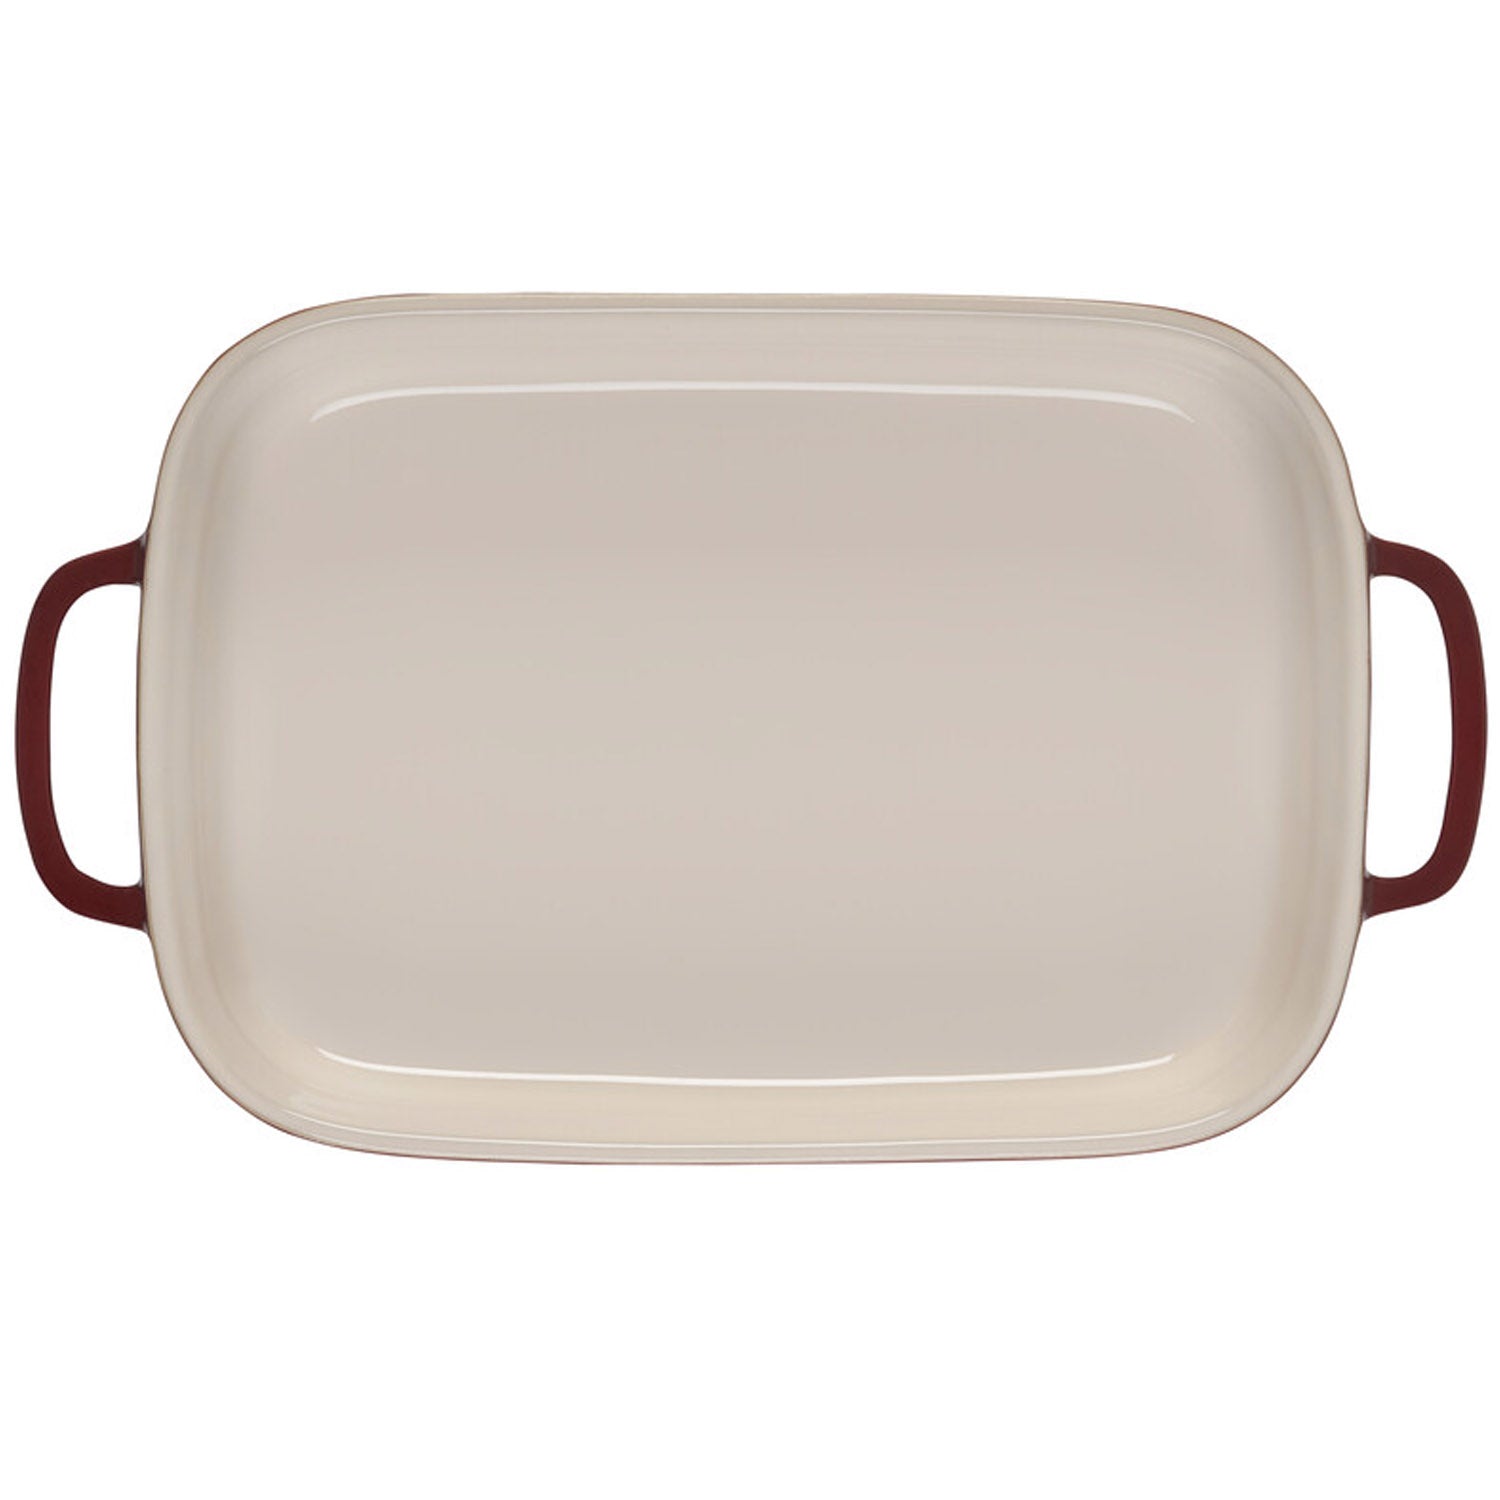 Le Creuset Stoneware Rectangular Dish with Platter Lid, White